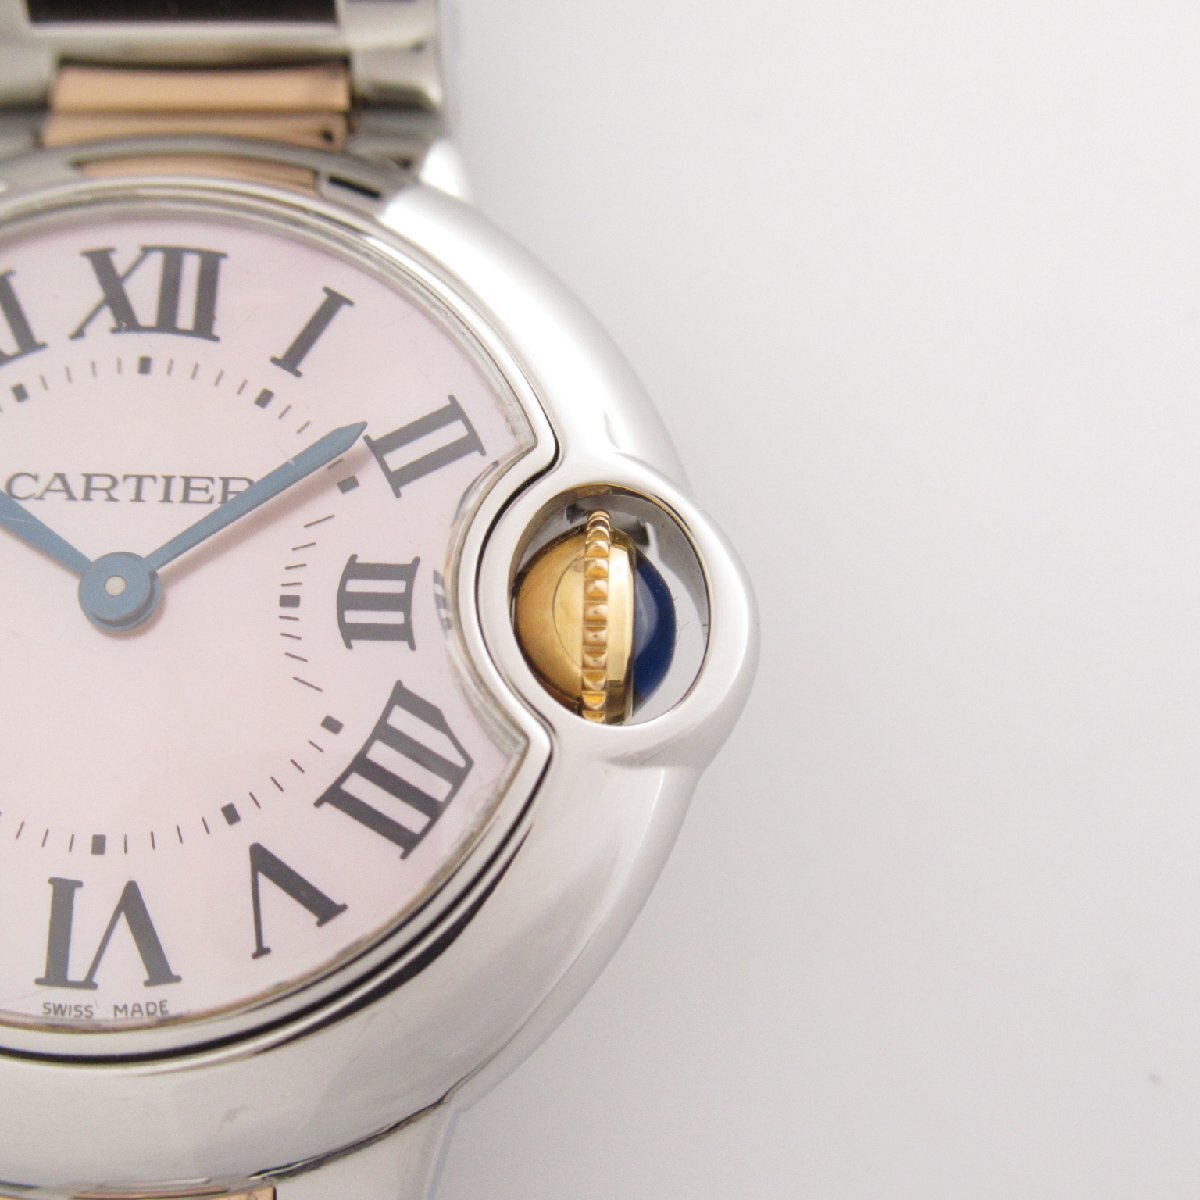  Cartier ba long blue SM wristwatch watch brand off CARTIER K18PG( pink gold ) wristwatch PG/SS used lady's 